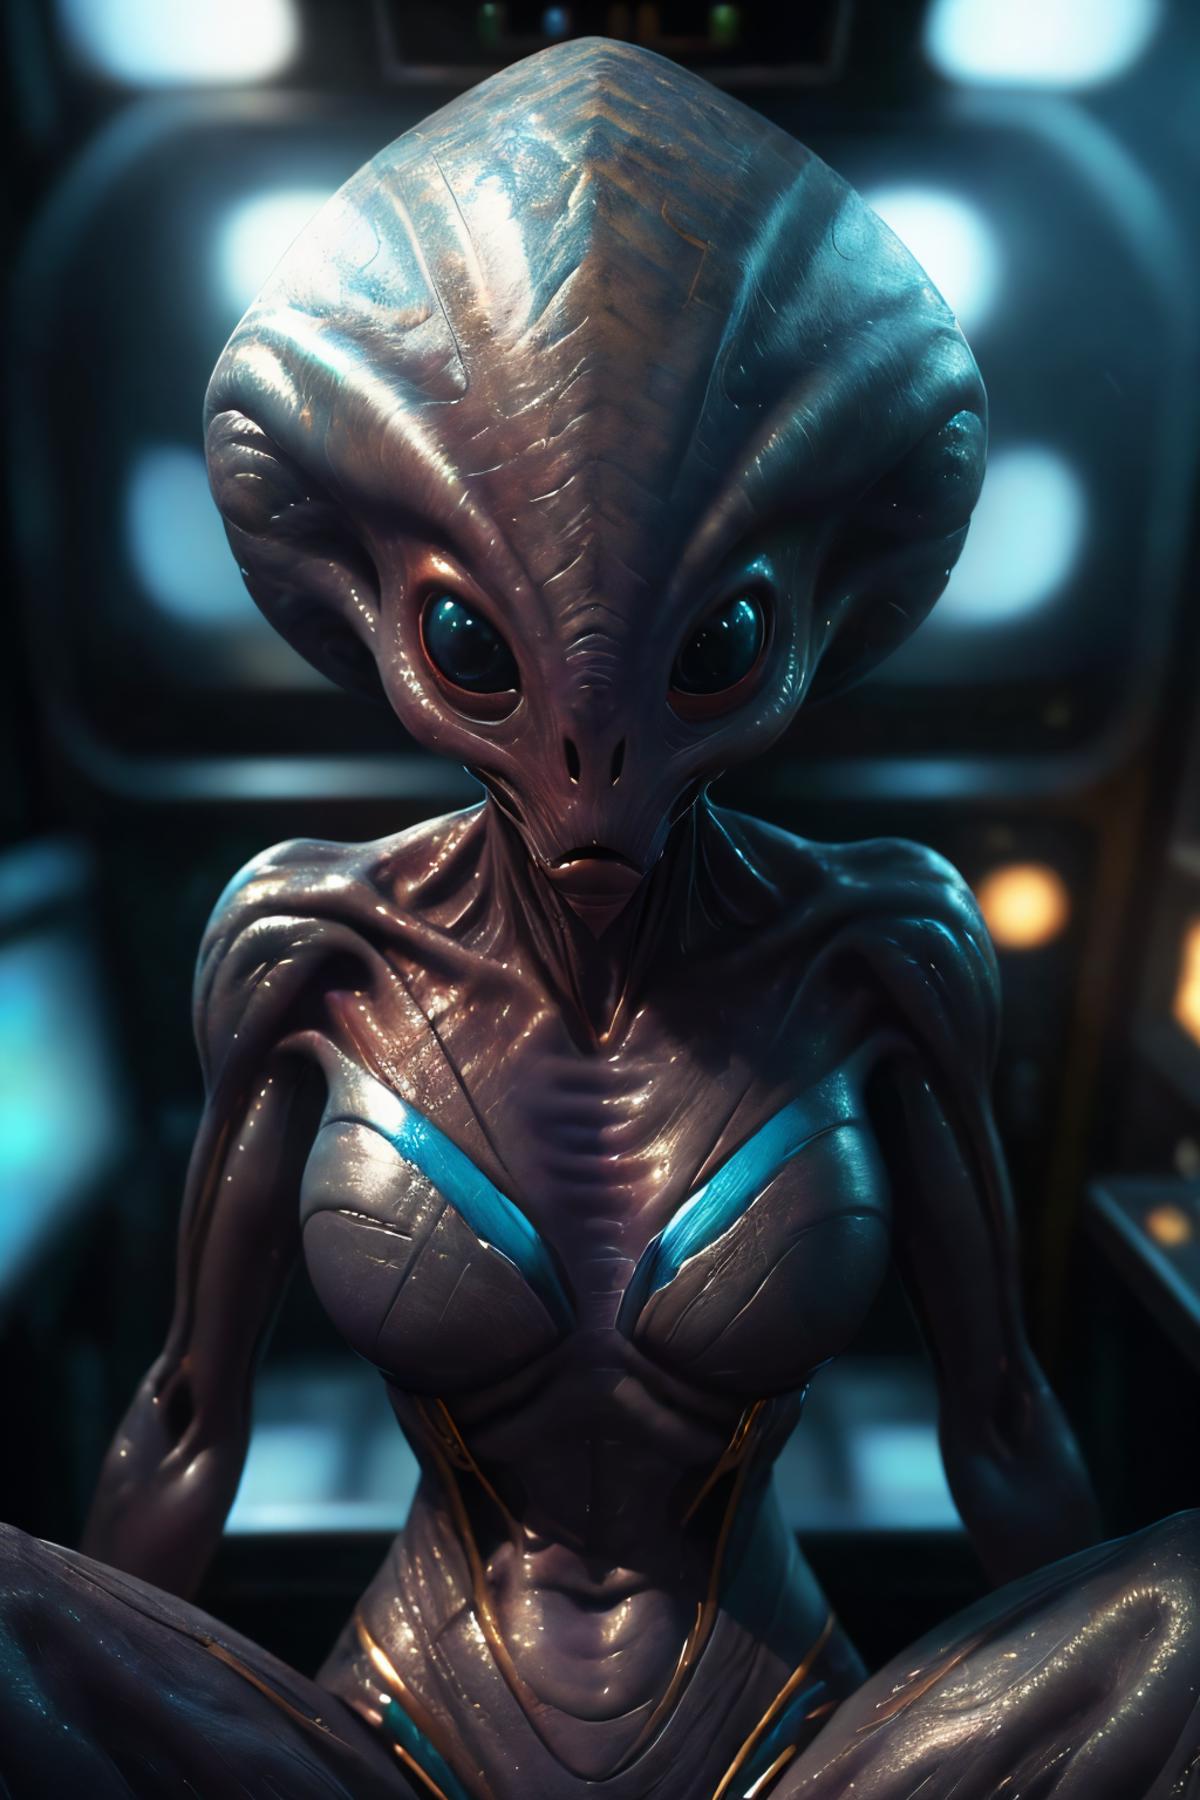 a Random Alien image by Darknoice